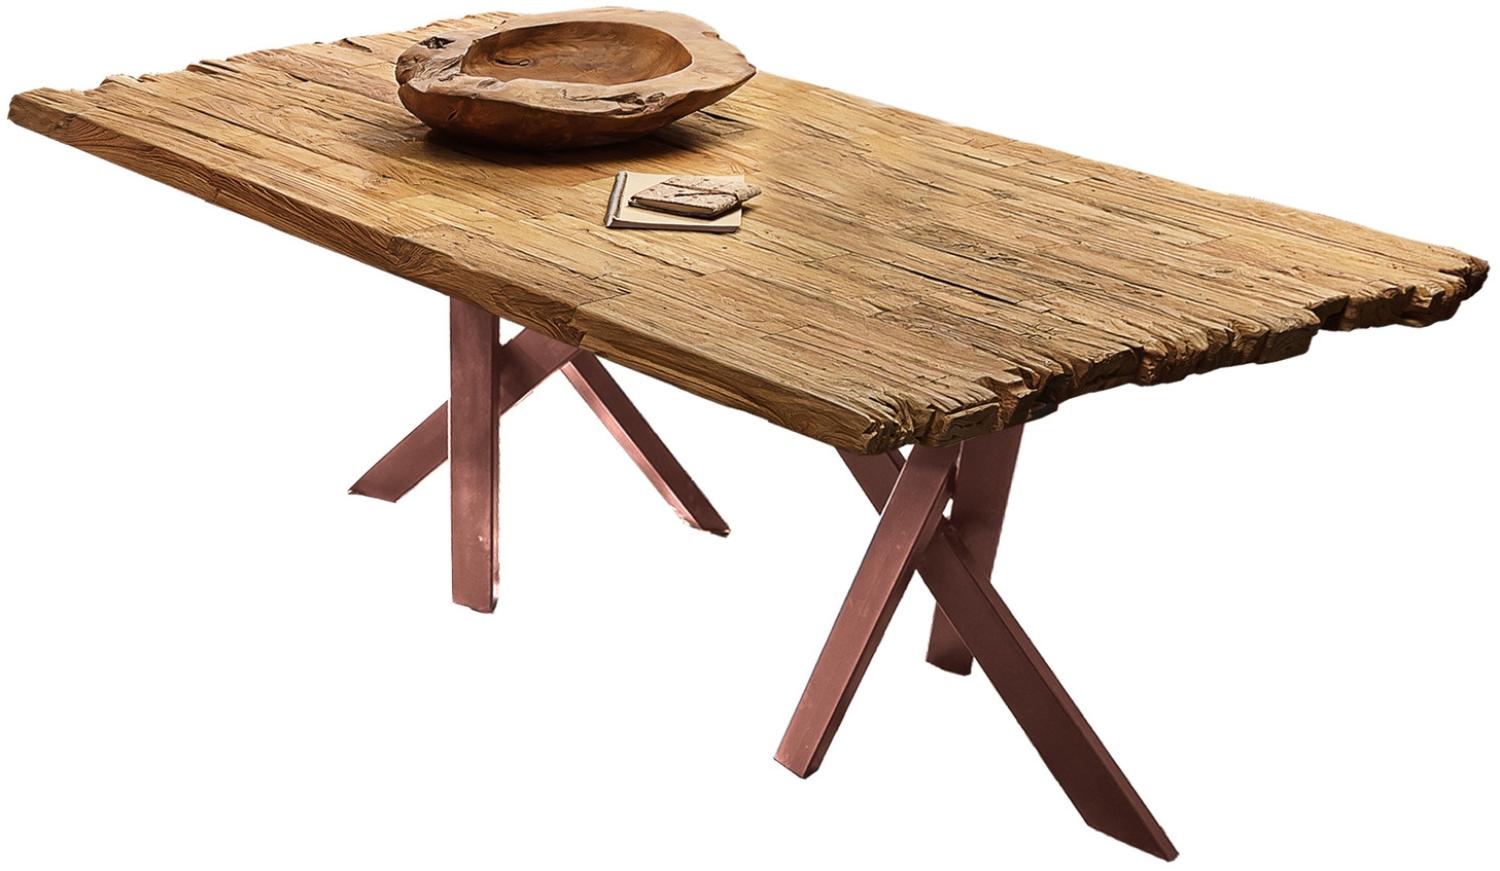 TABLES&CO Tisch 240x100 Teak Natur Metall Braun Bild 1